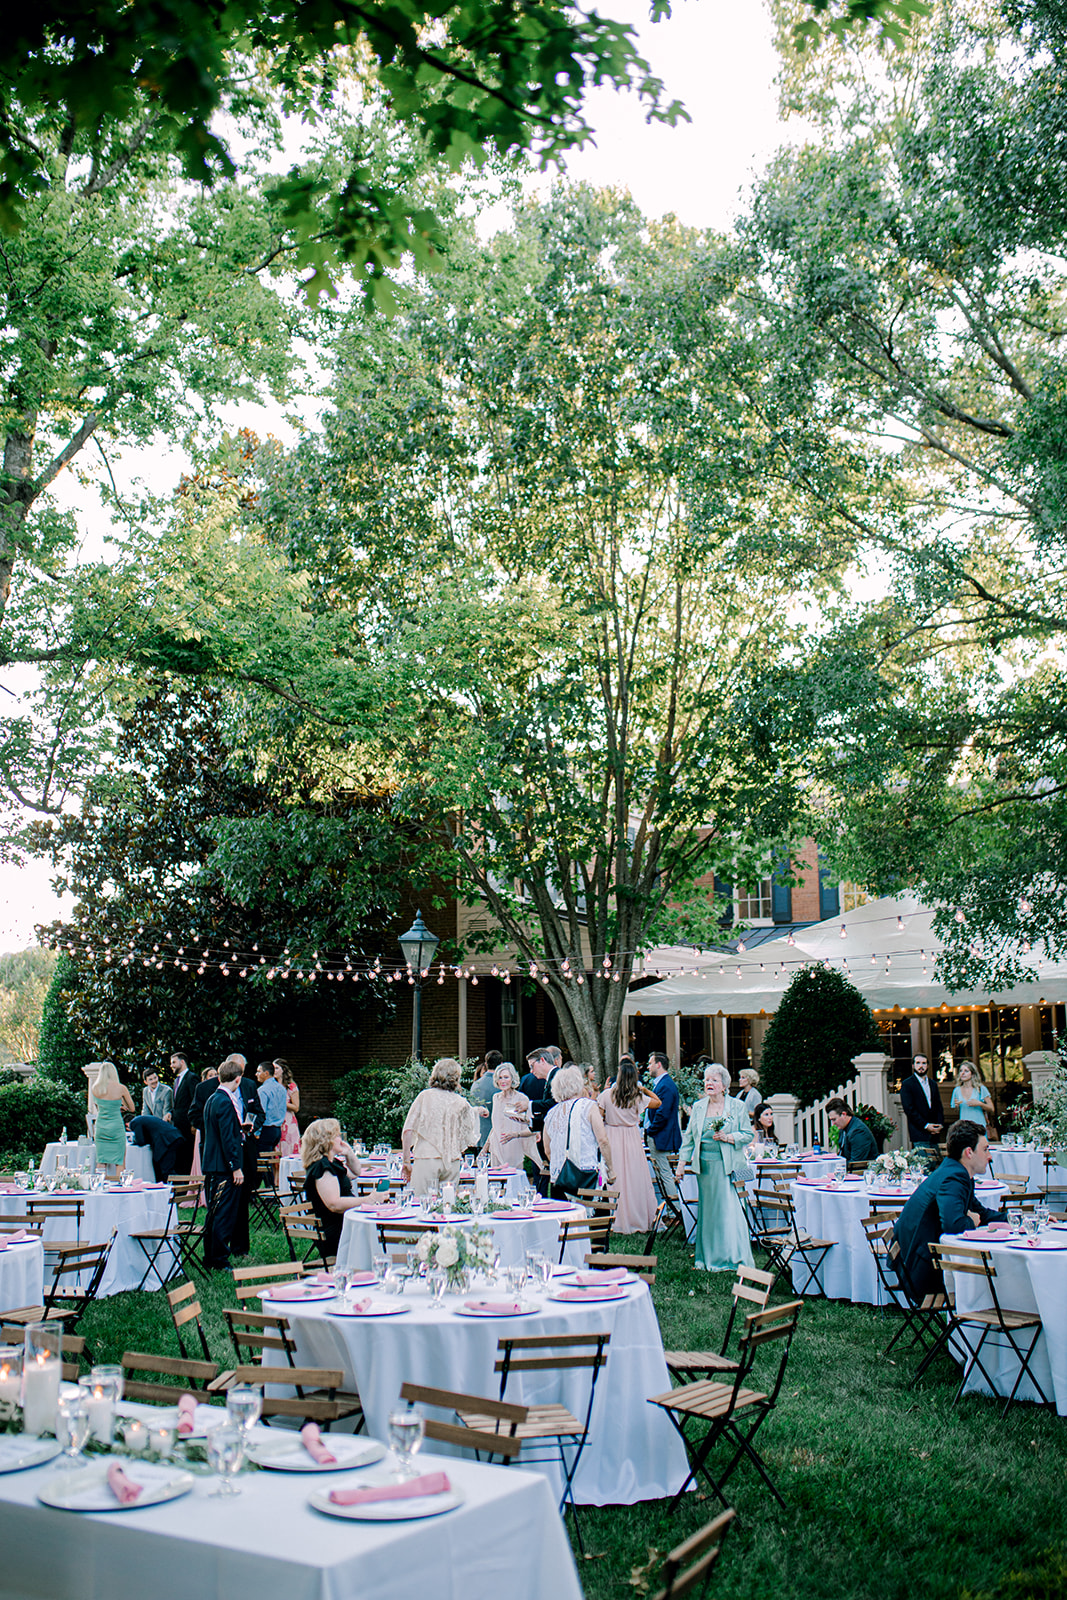 Tennessee Pleasant Hill Mansion Outdoor Wedding | Nashville Bride Guide